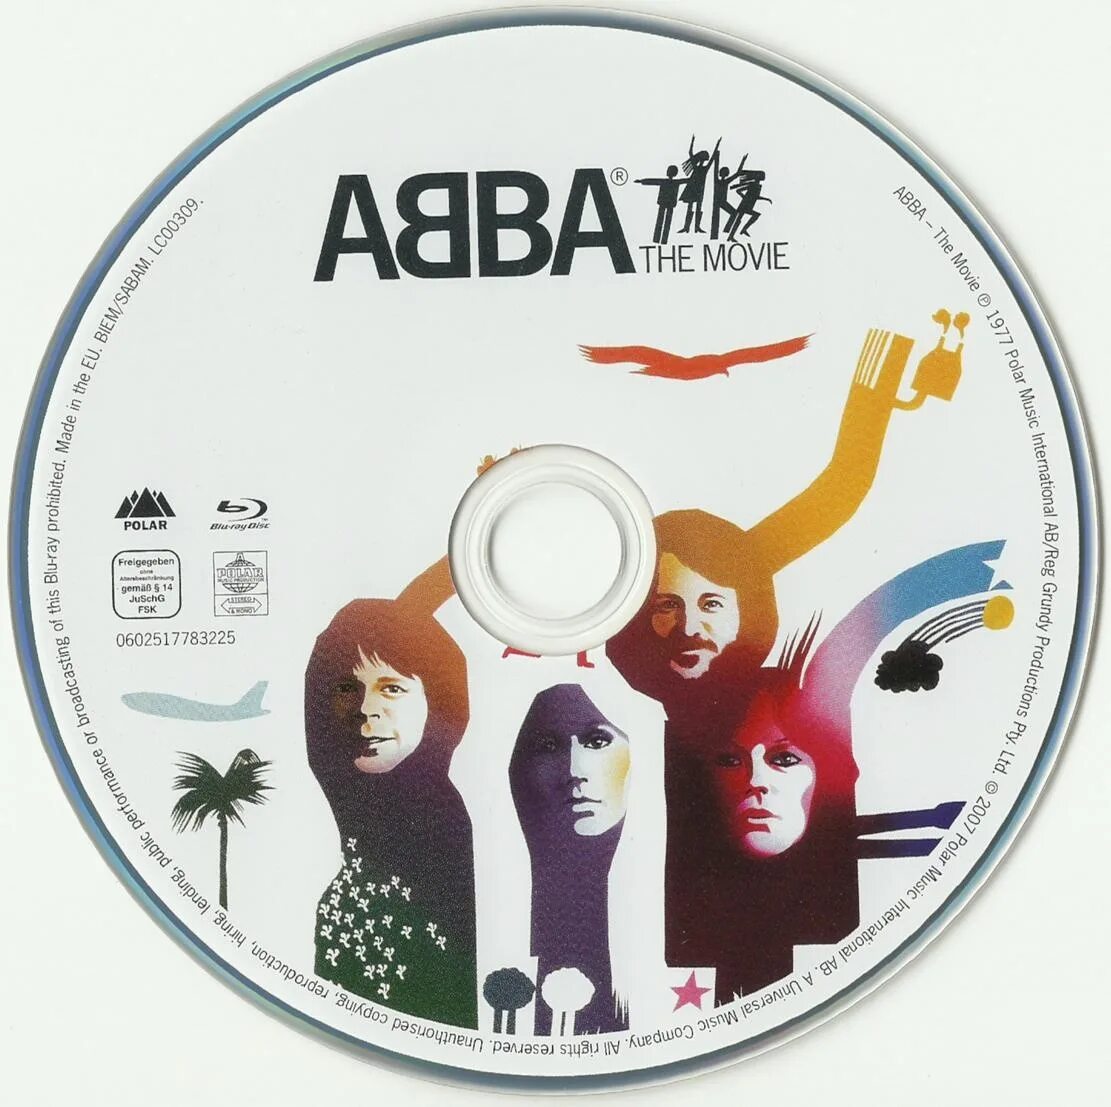 5 альбом группы. Абба 1977 the album. ABBA CD 1975. ABBA CD Covers обложки. ABBA the album 1977 обложка.